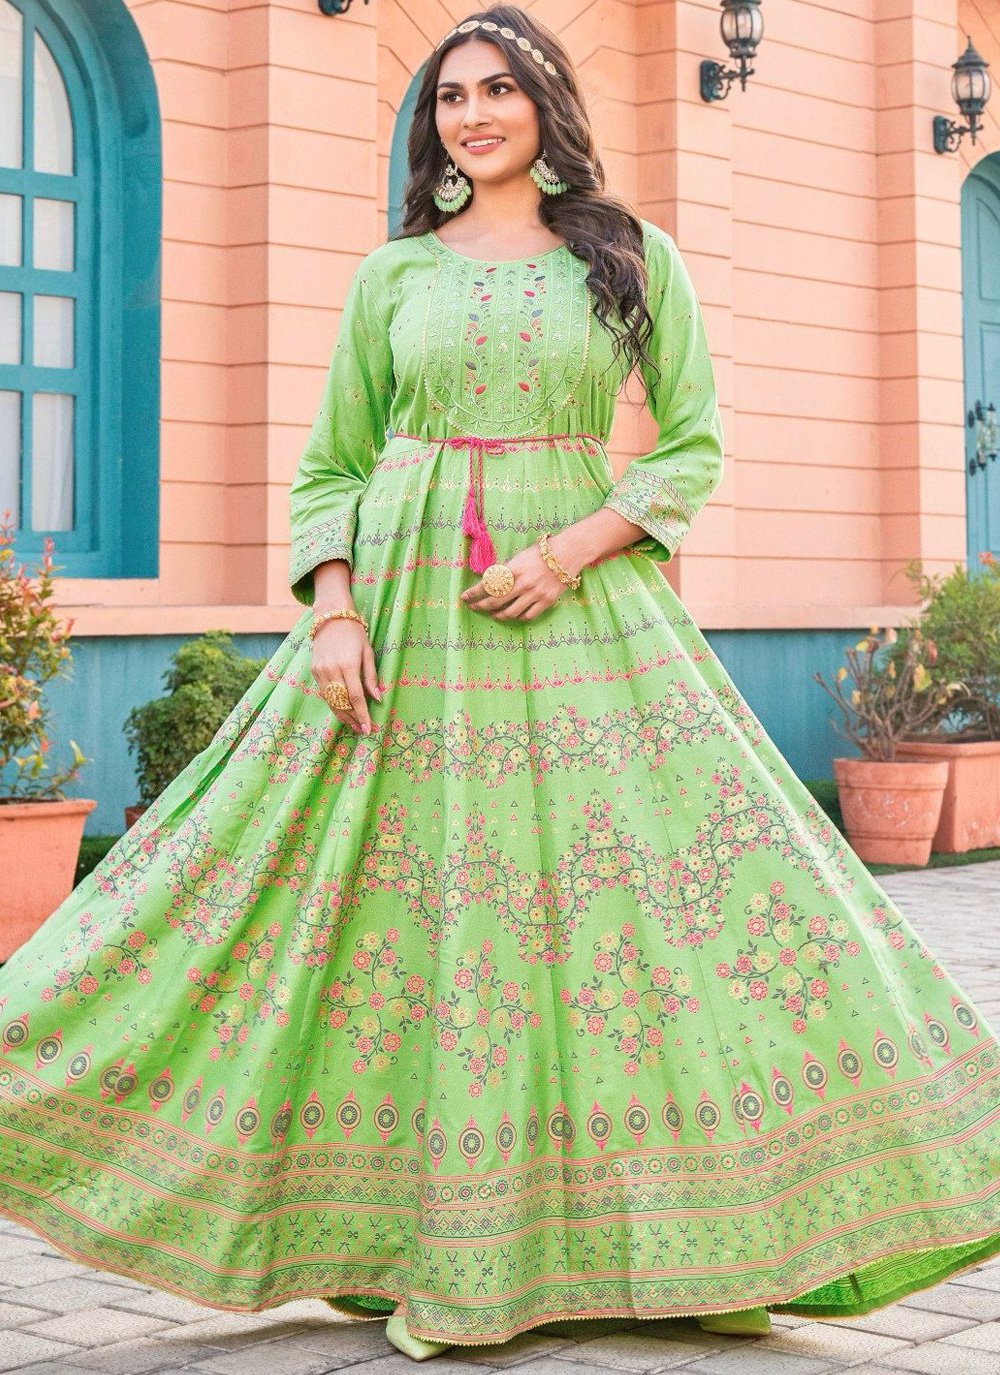 Green Gown - Kala Kunj Saree Vatika